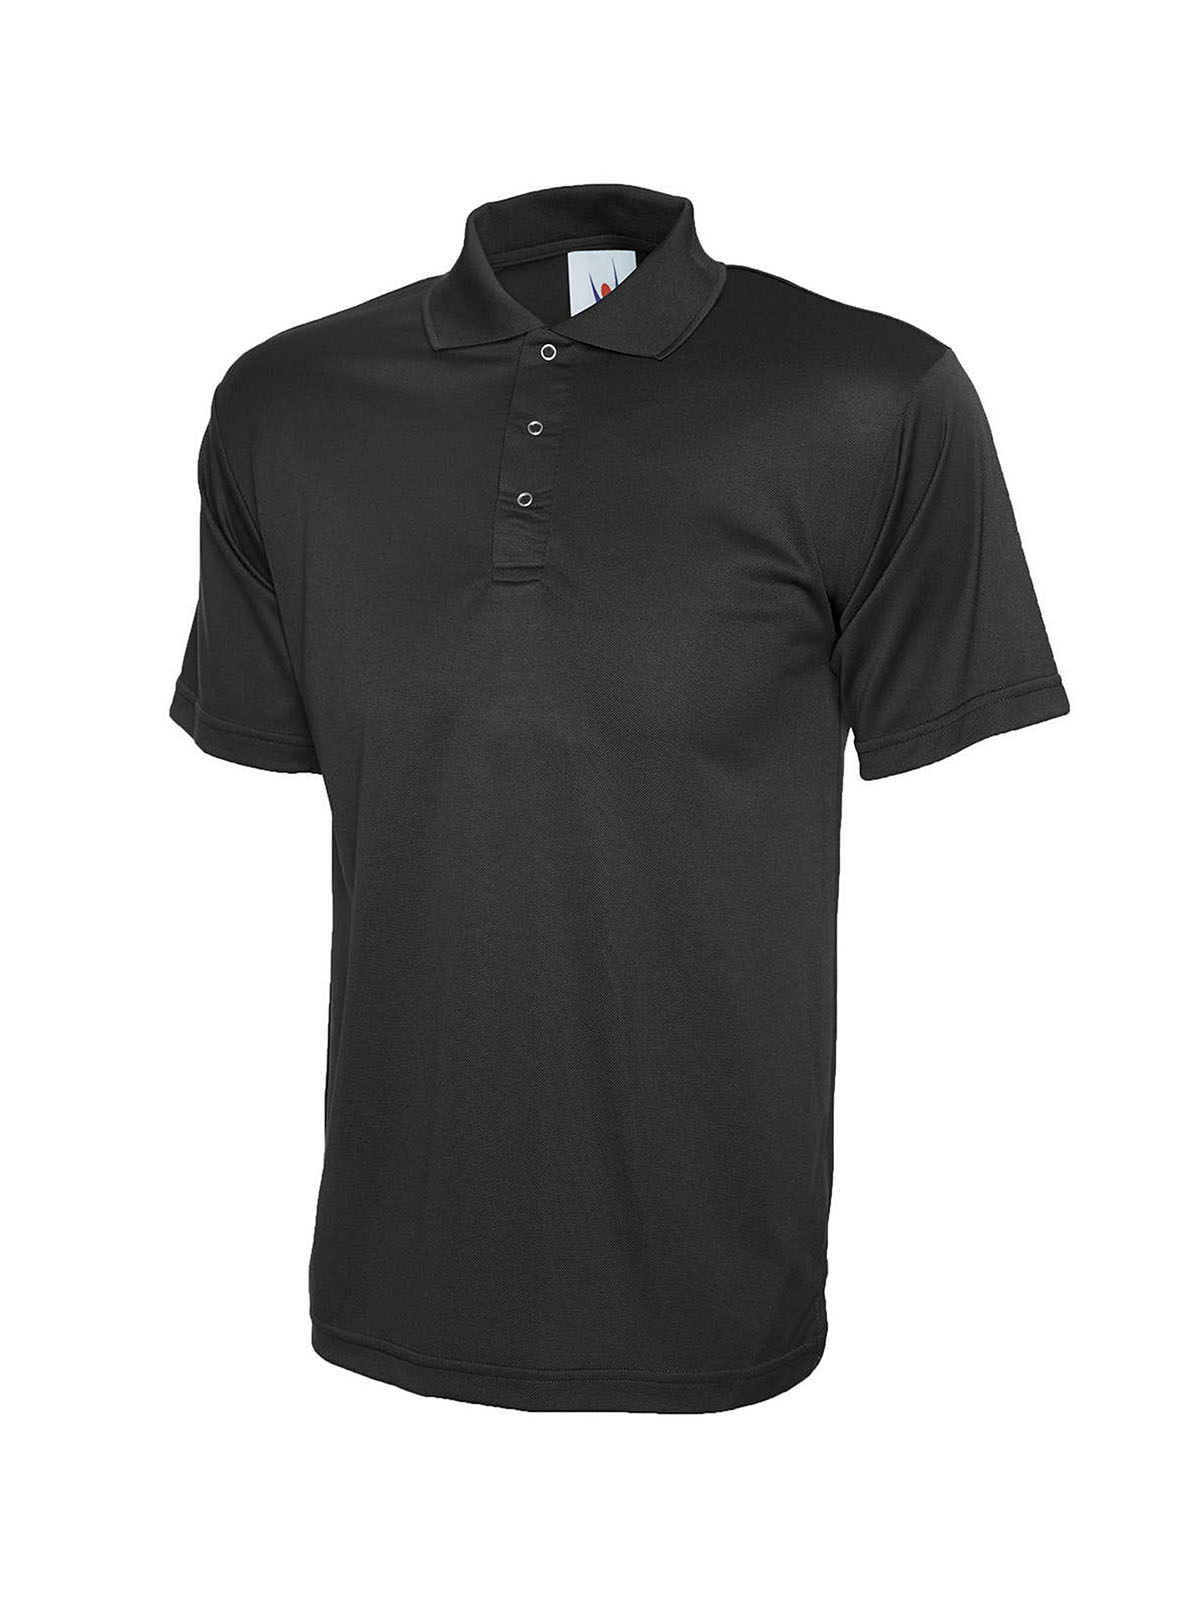 Processable Polo Shirt - The Work Uniform Company